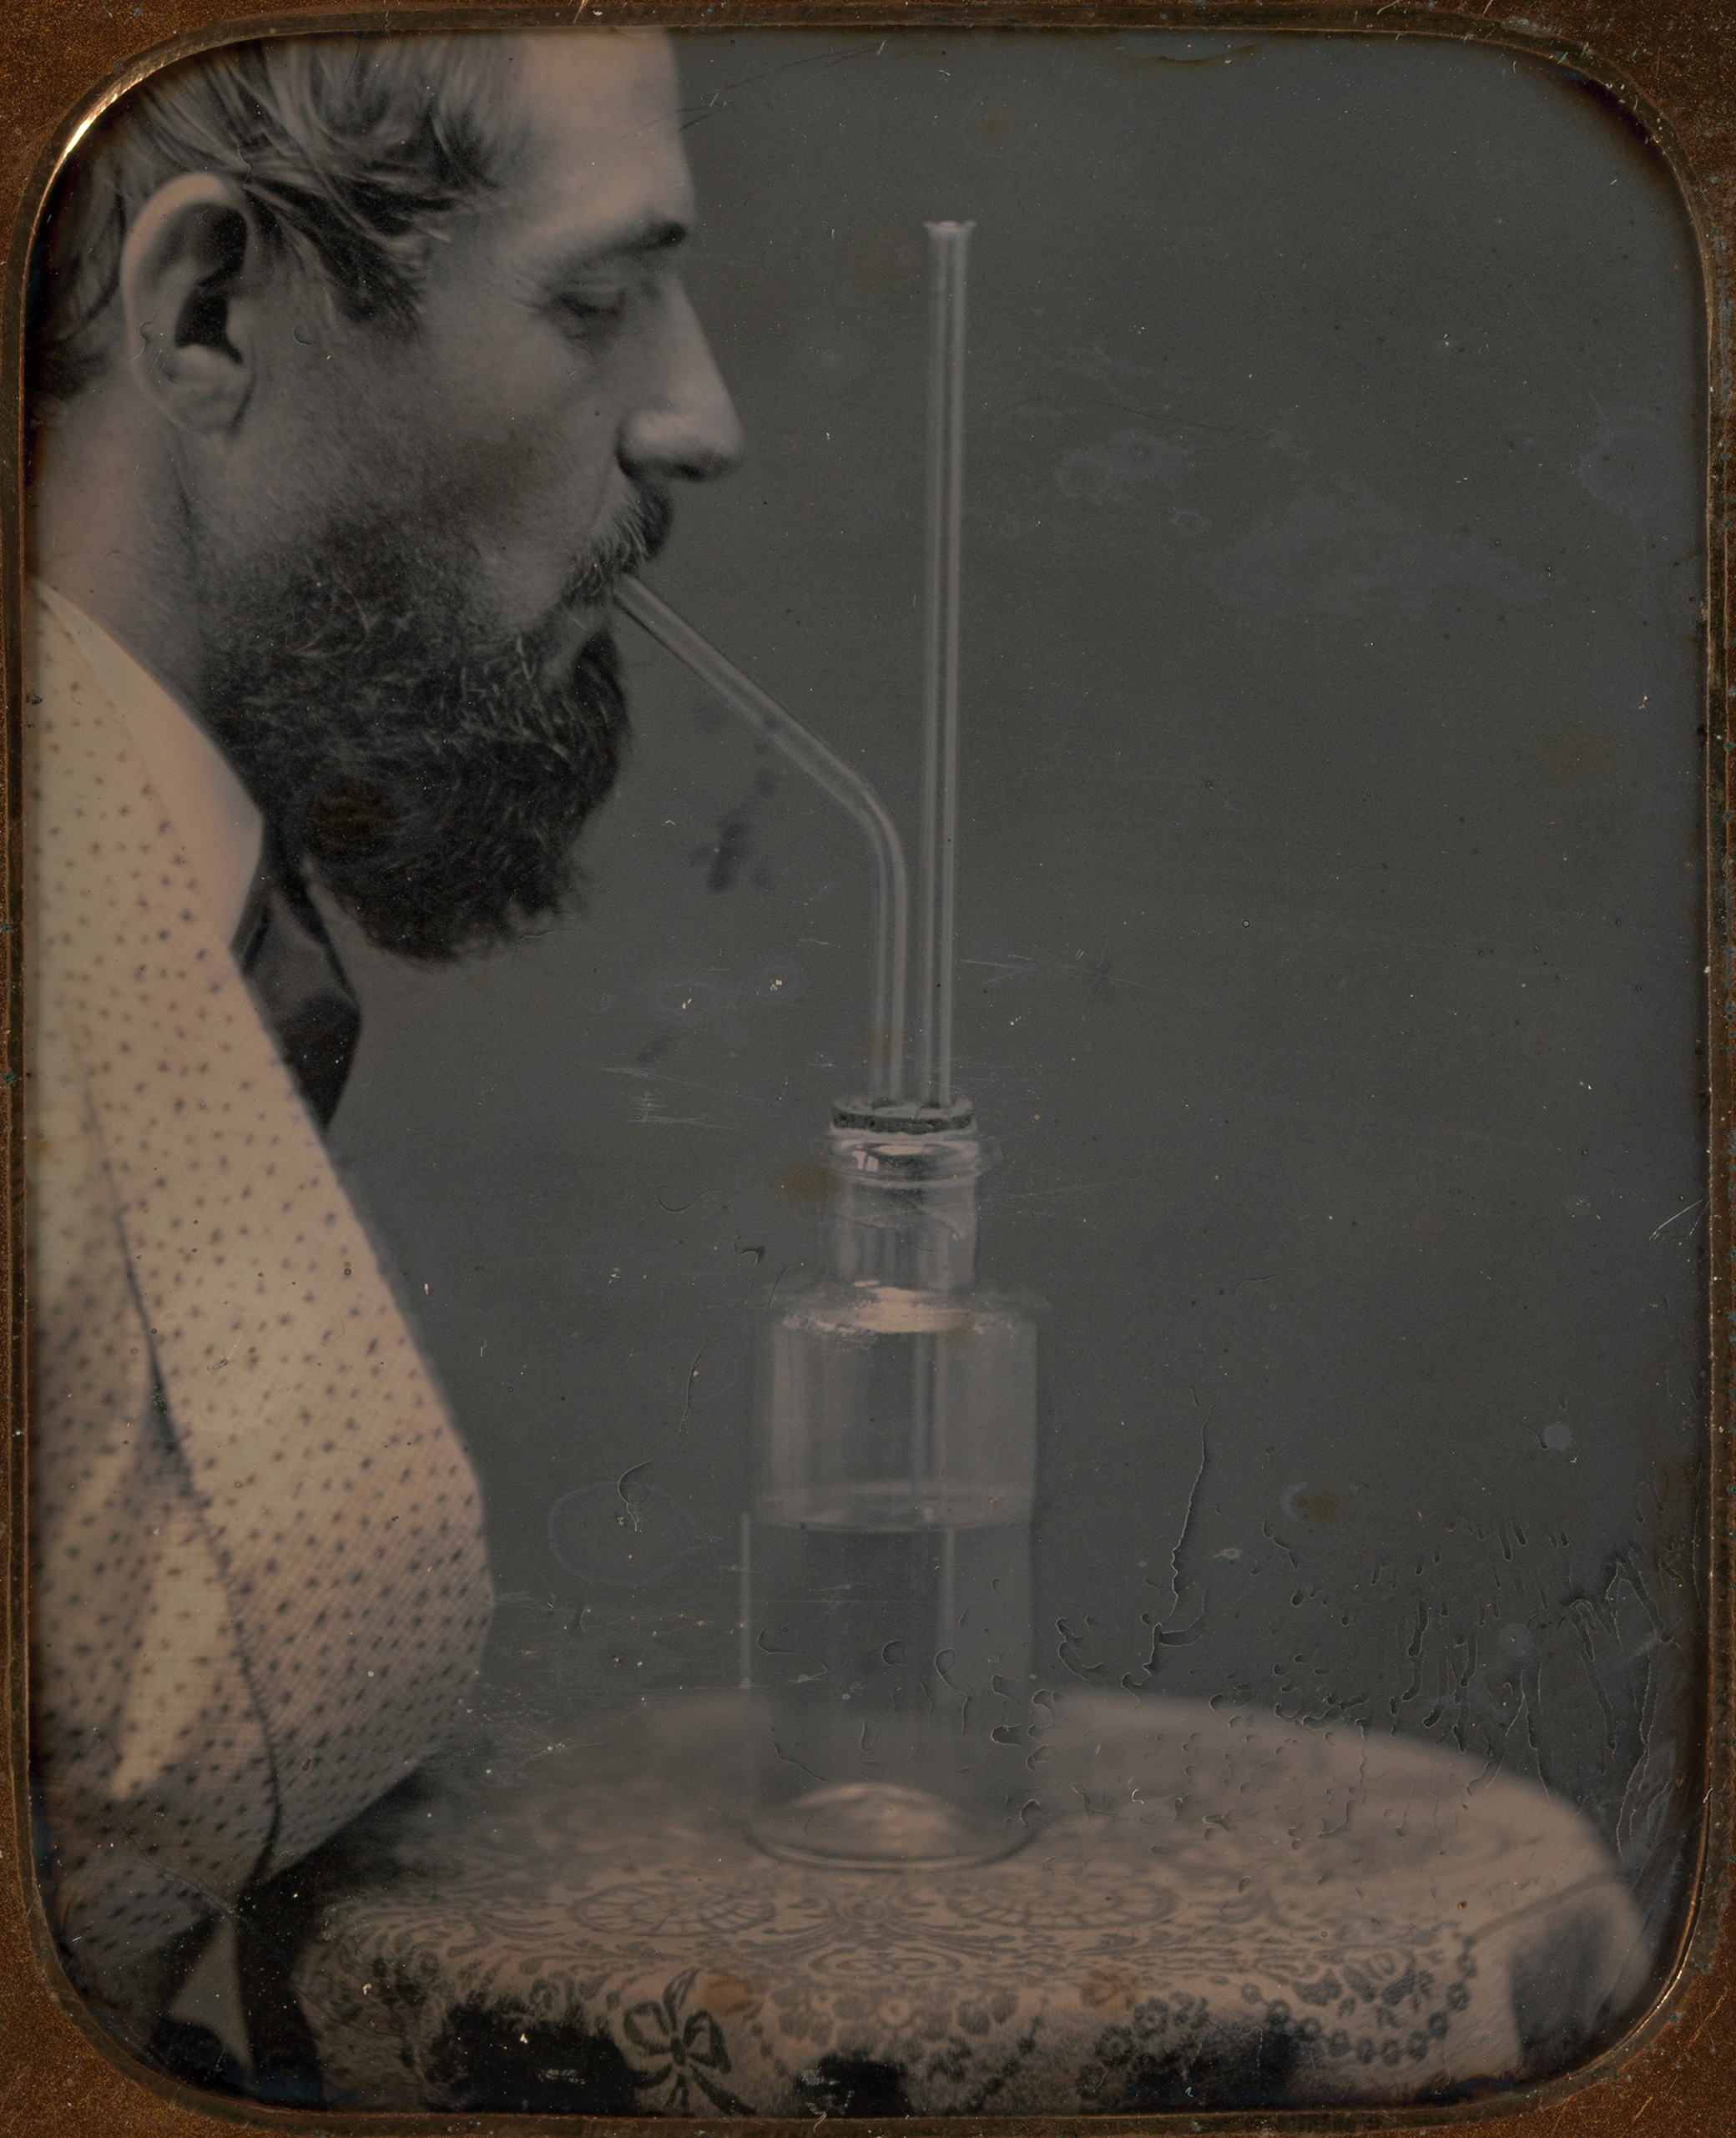 James Hyatt Inhaling Chlorine Gas, by Peter Welling, c. 1850. The Metropolitan Museum of Art, Gilman Collection, Museum Purchase, 2005.